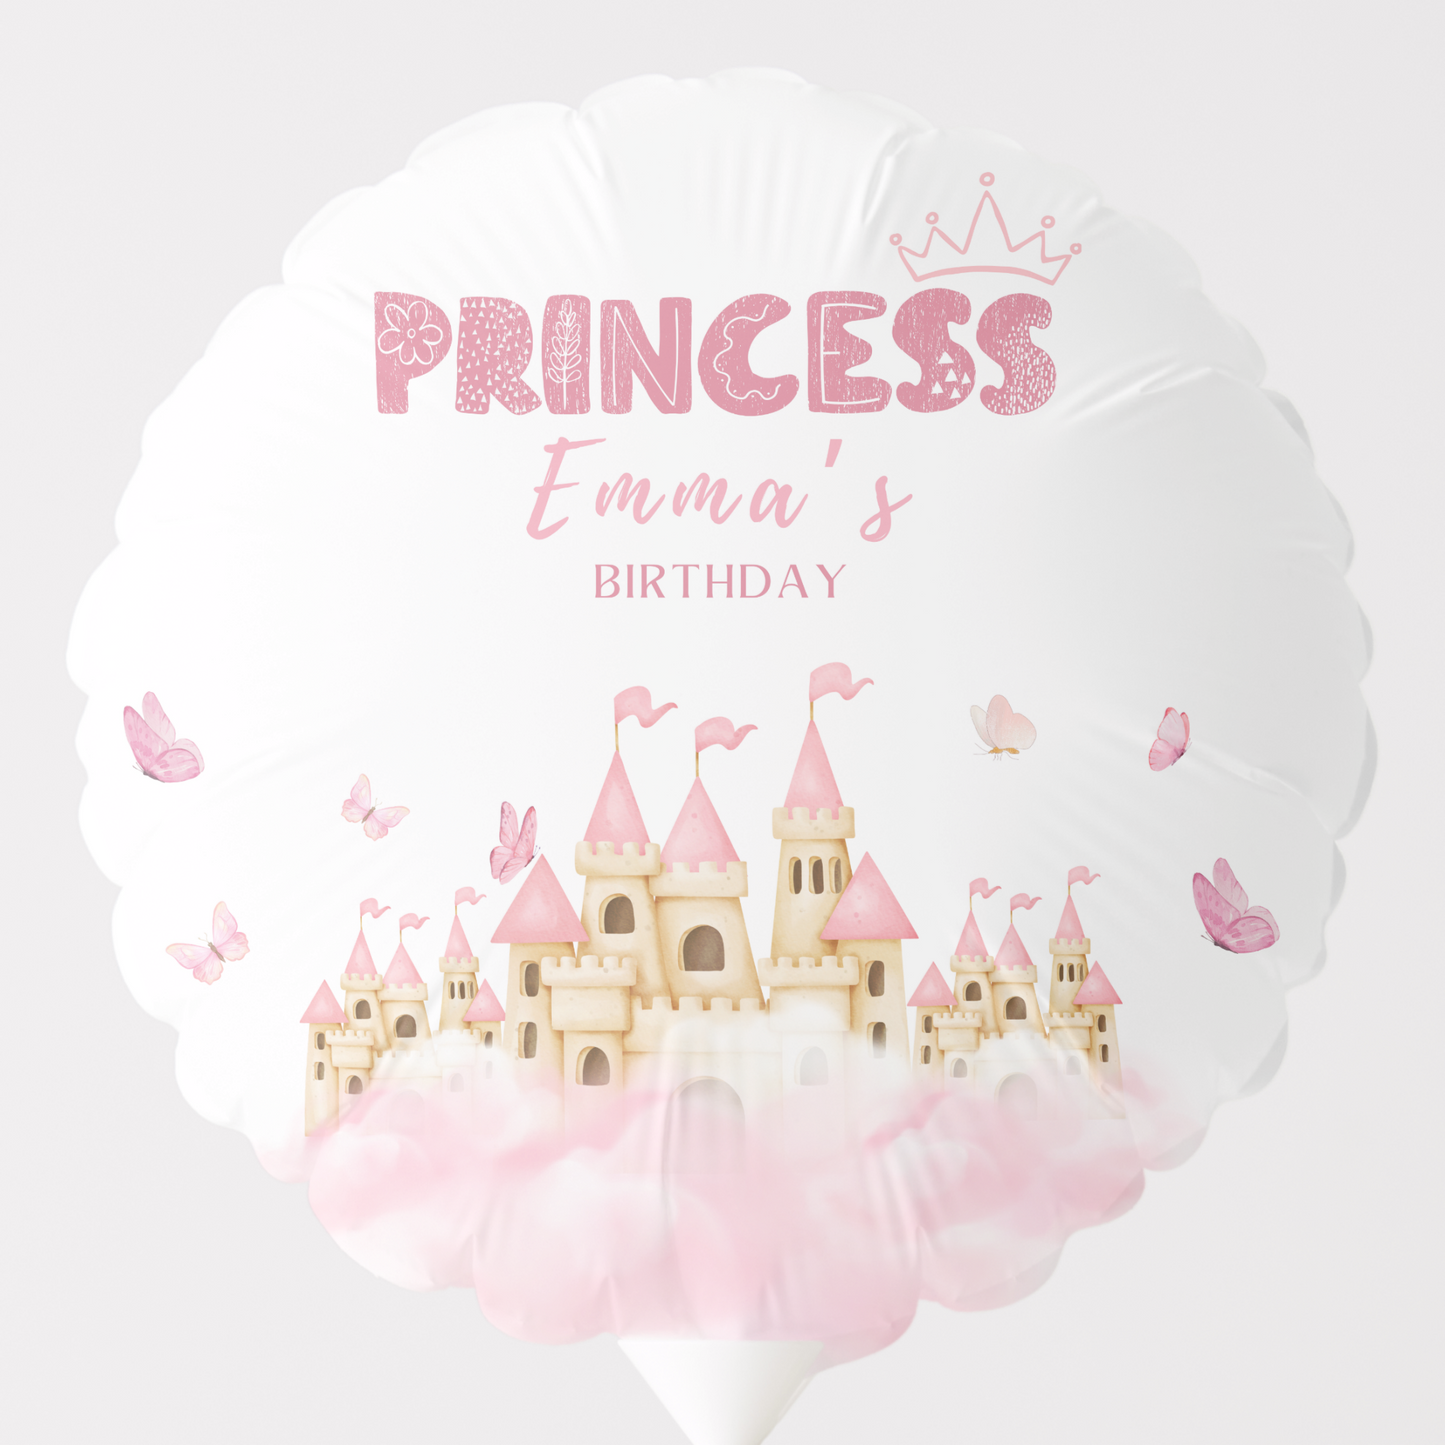 Pink Princess Castle Birthday Balloon (DIGITAL DOWNLOAD)